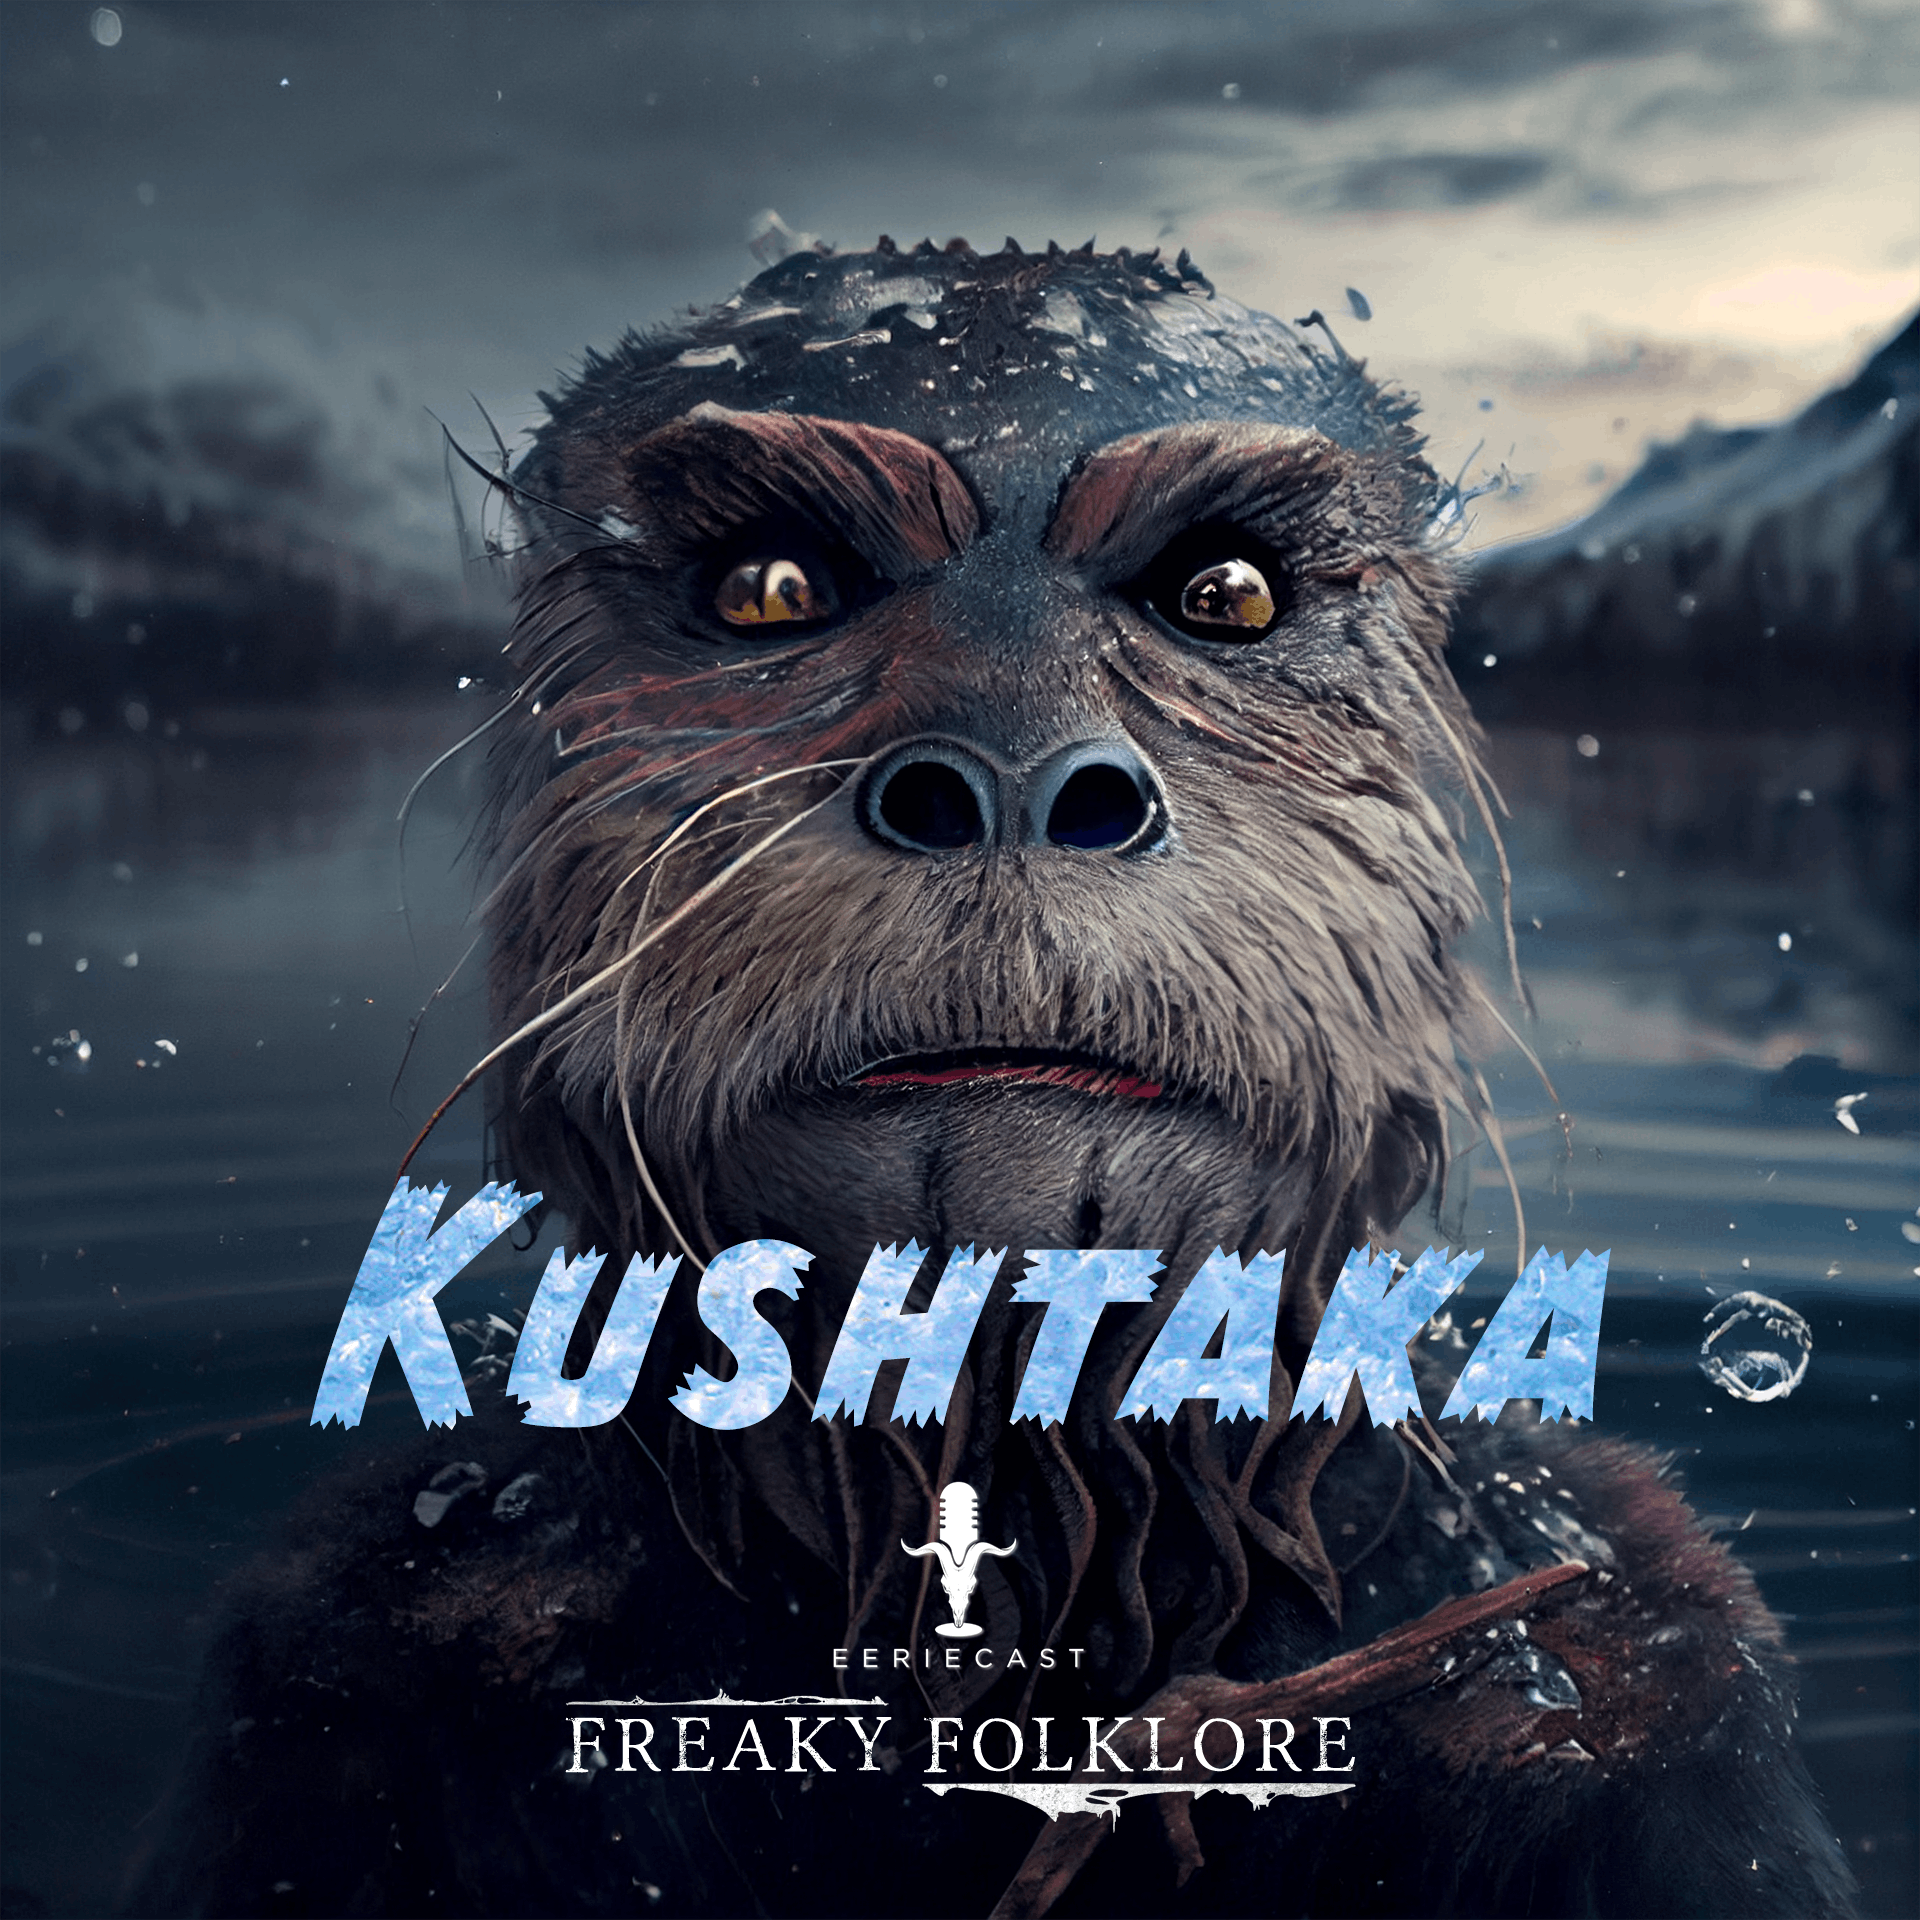 Kushtaka-The Land Otter-Man